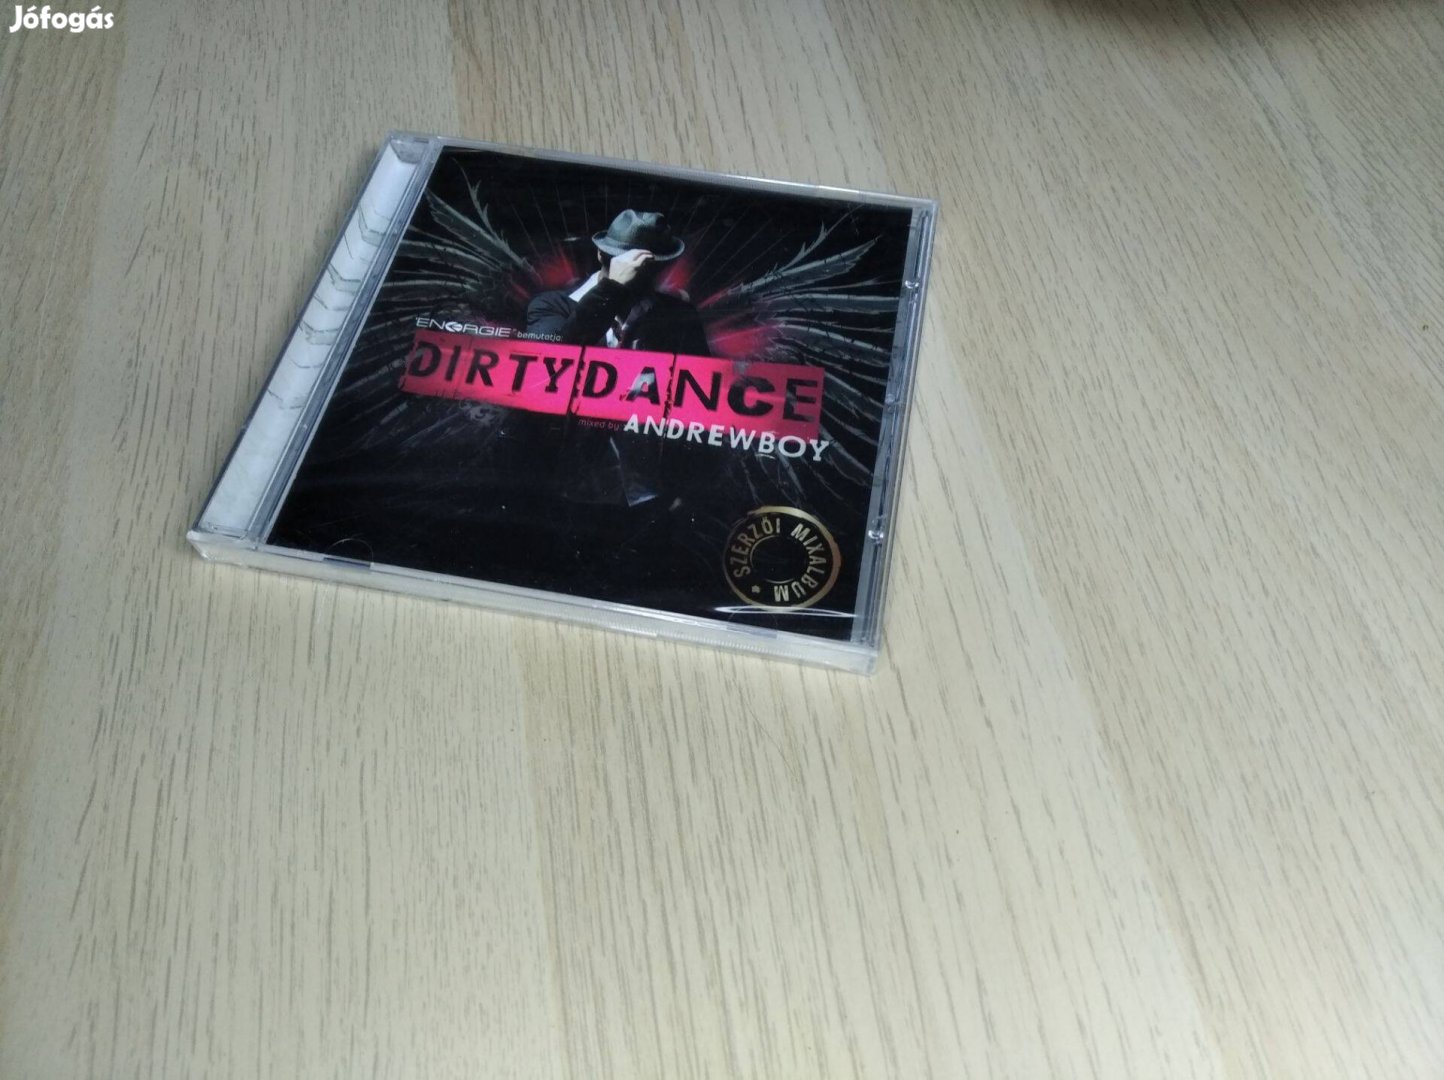 Andrewboy - Dirty Dance / CD (Bontatlan)